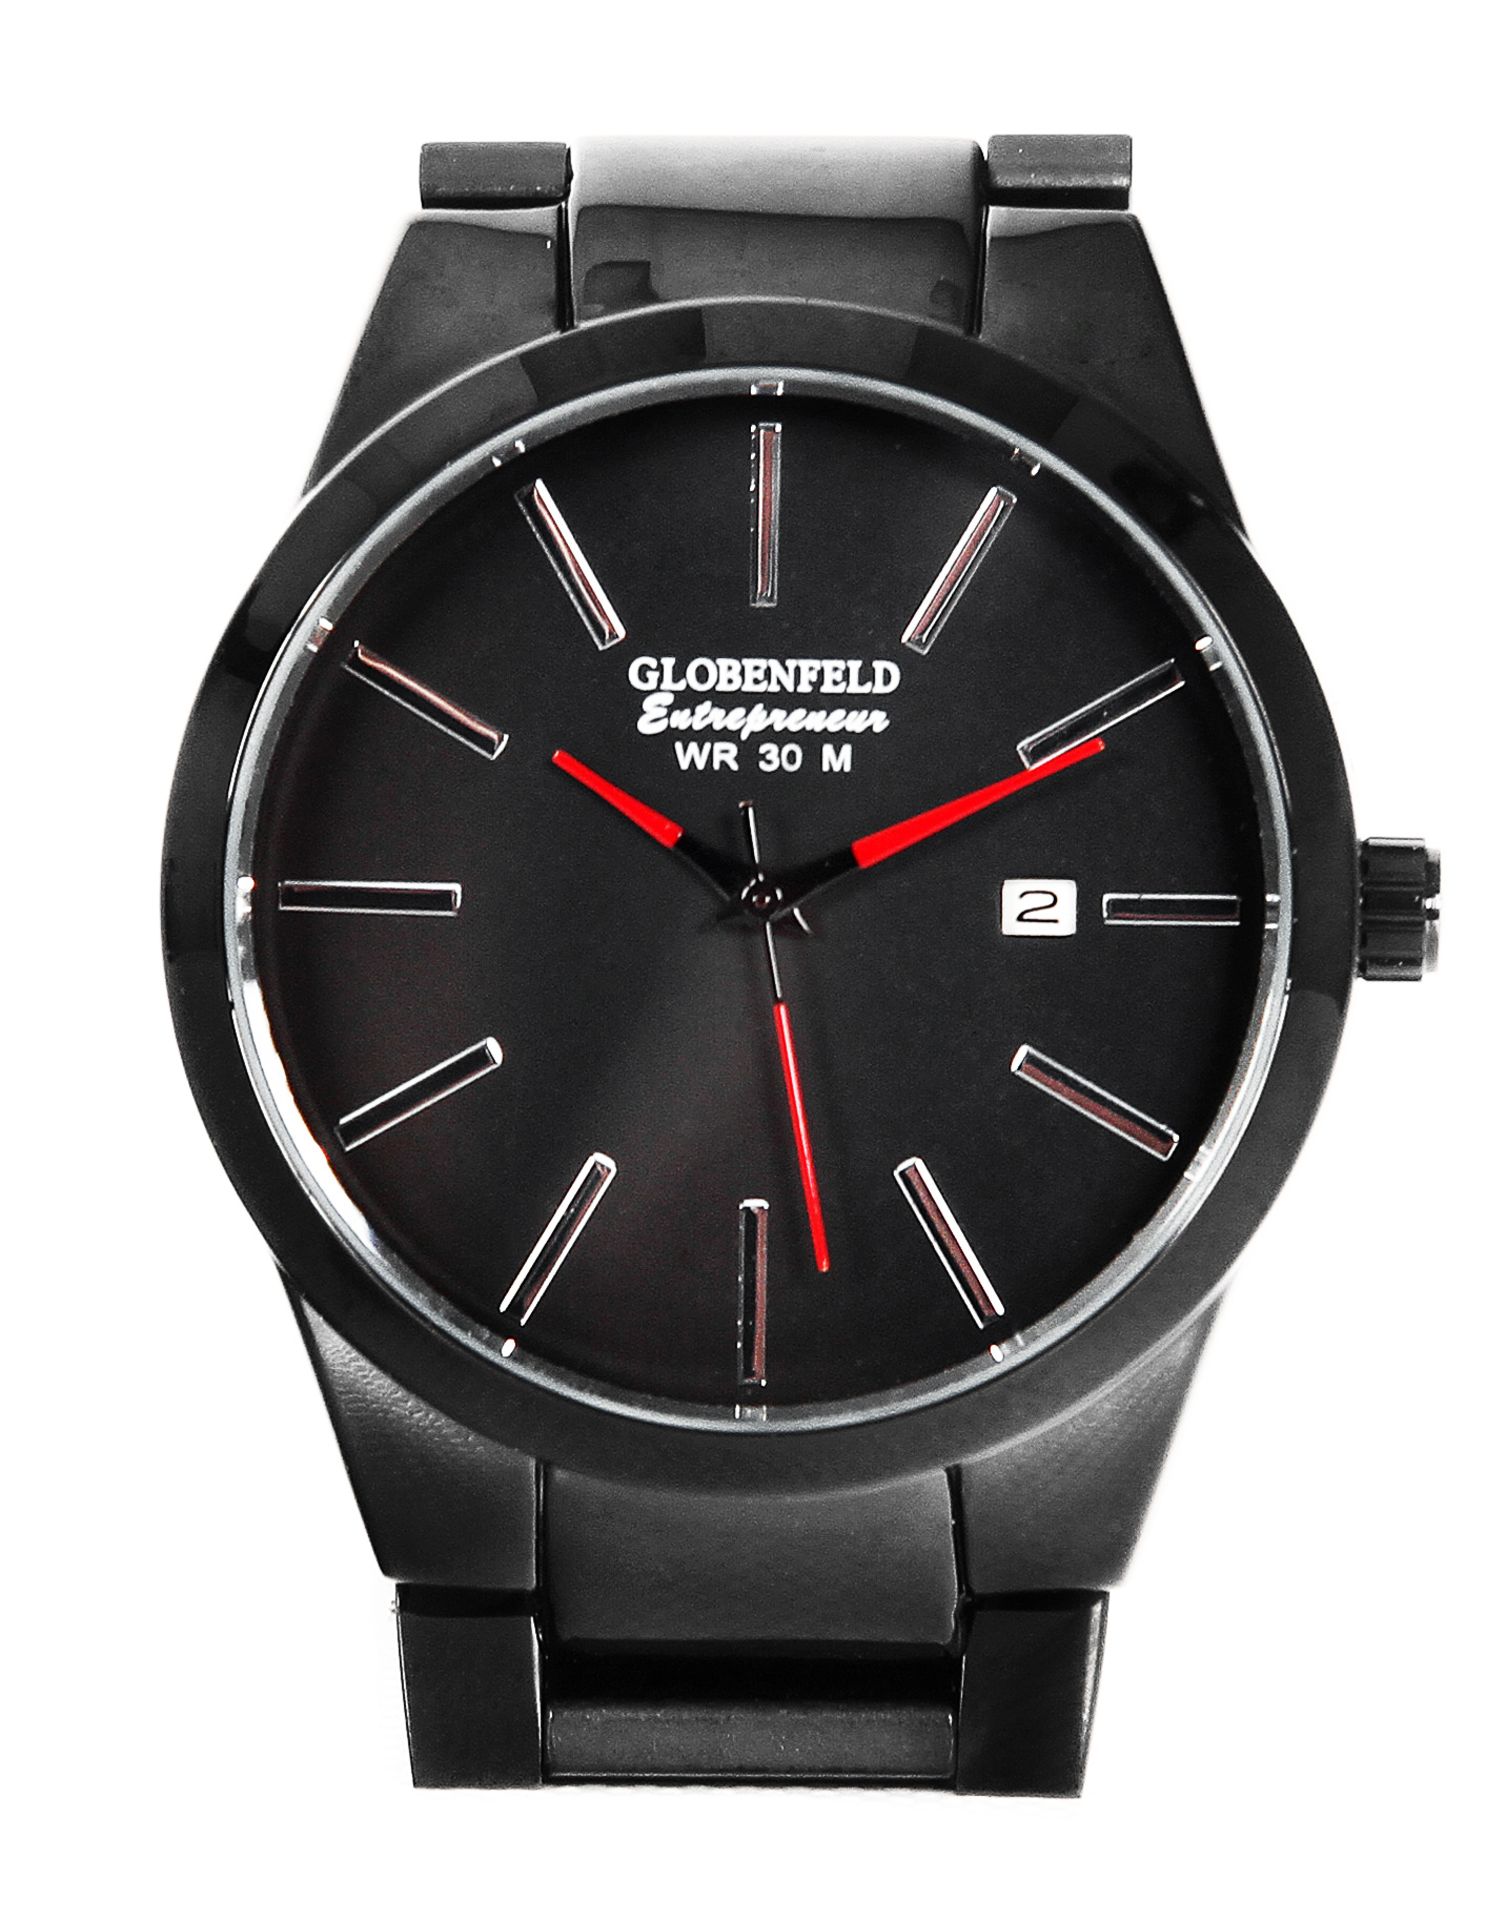 Globenfeld Entrepreneur Elegant Men’S Dress Watch. Limited Edition. Slimline Style With Black